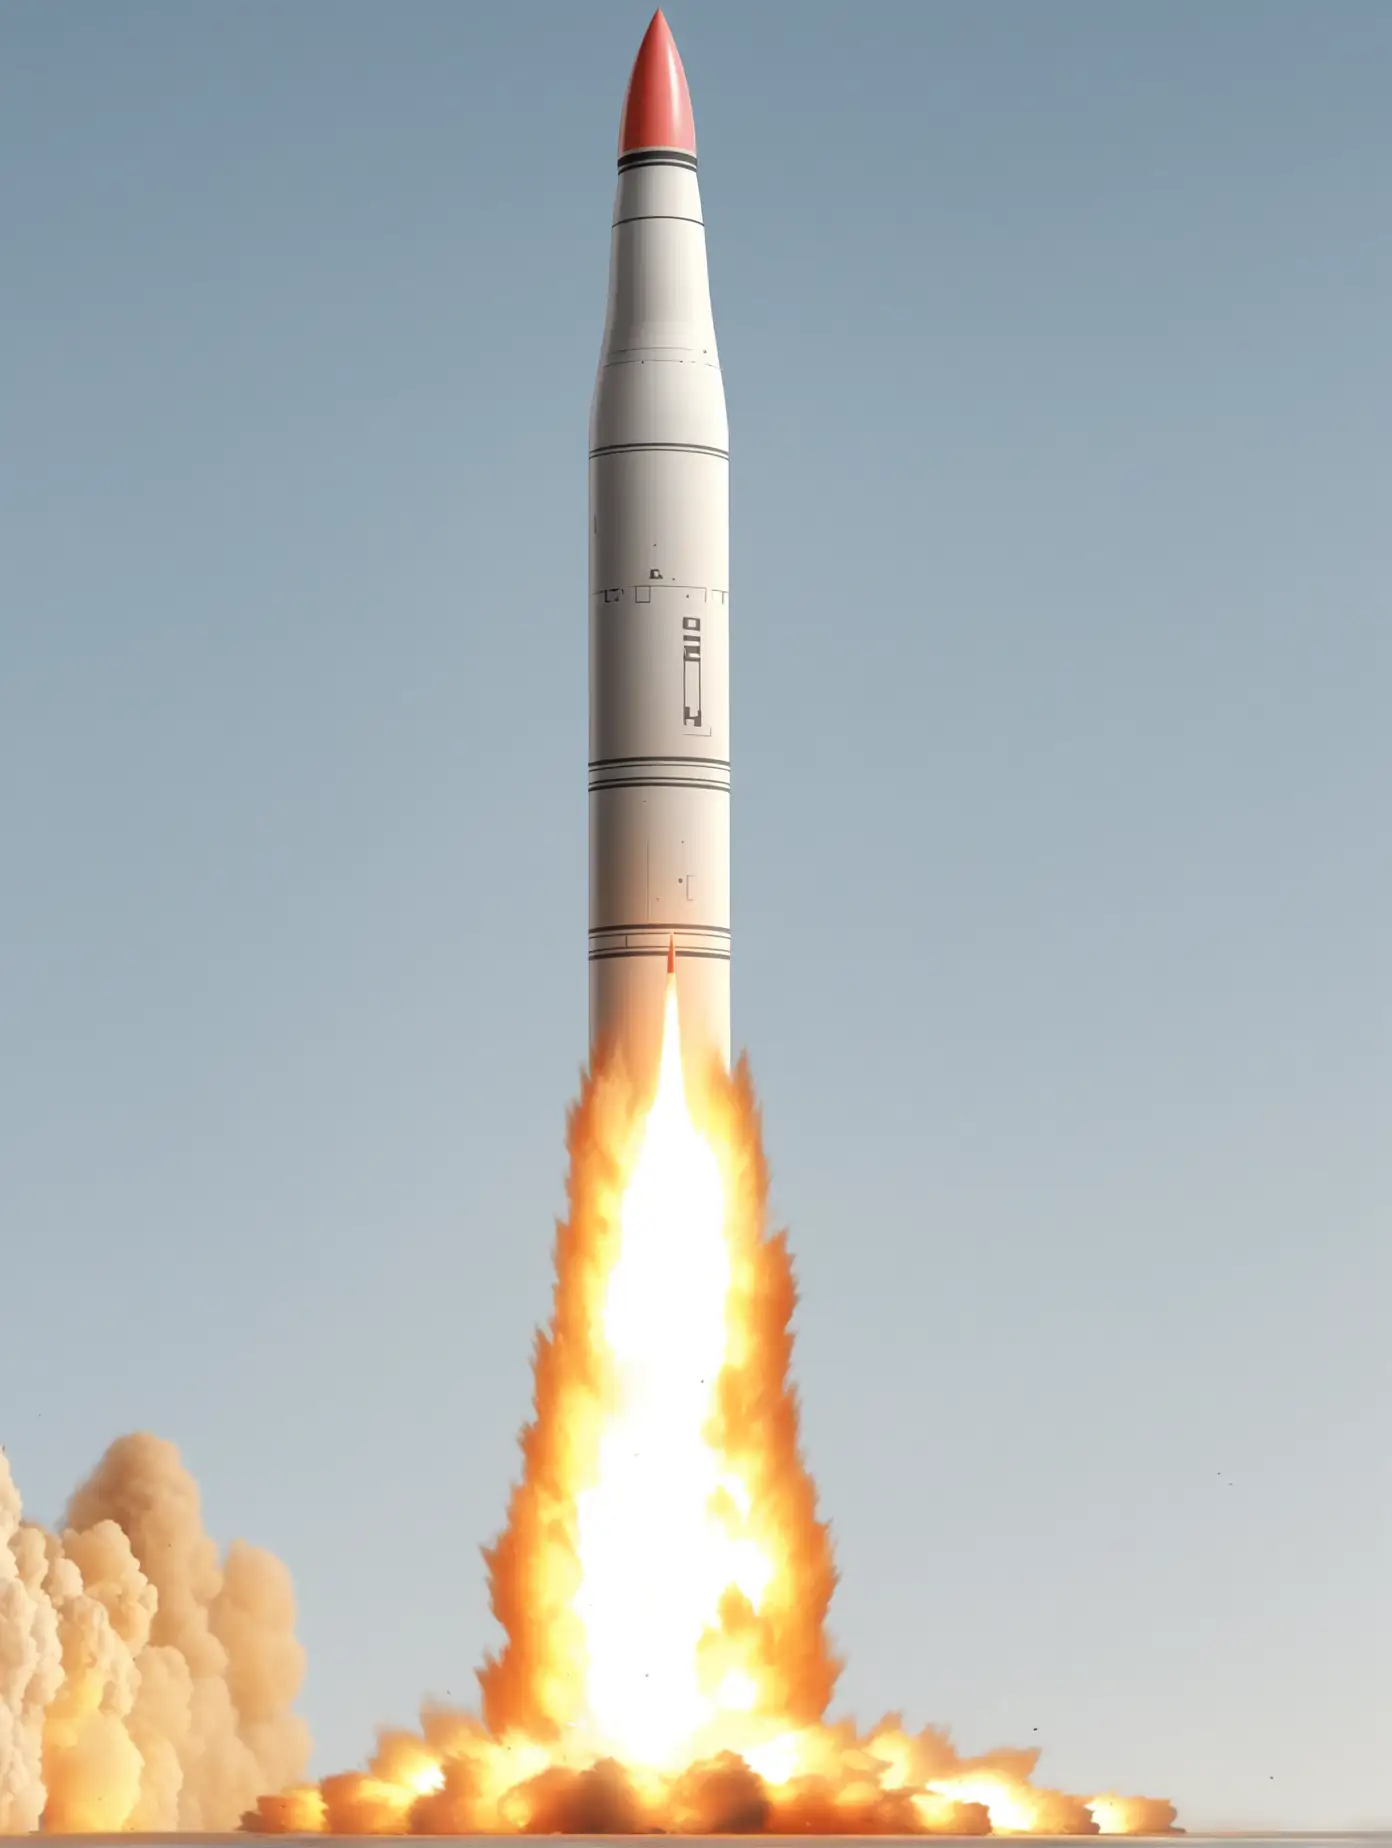 Defaults: beautiful, white background.
Firing super high tech ballistic missile.